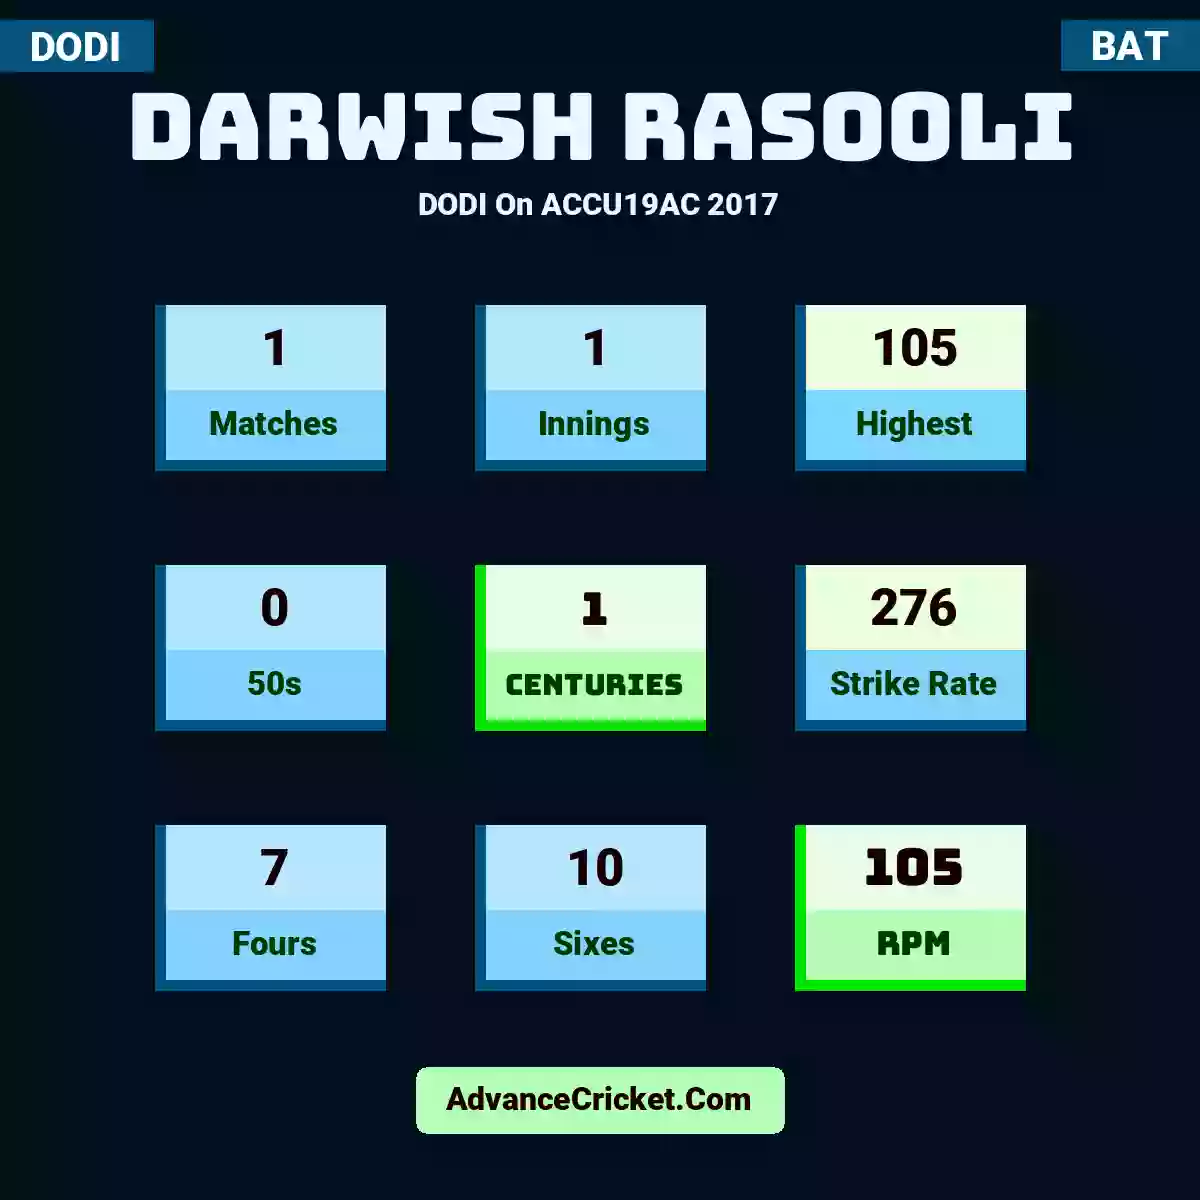 Darwish Rasooli DODI  On ACCU19AC 2017, Darwish Rasooli played 1 matches, scored 105 runs as highest, 0 half-centuries, and 1 centuries, with a strike rate of 276. D.Rasooli hit 7 fours and 10 sixes, with an RPM of 105.